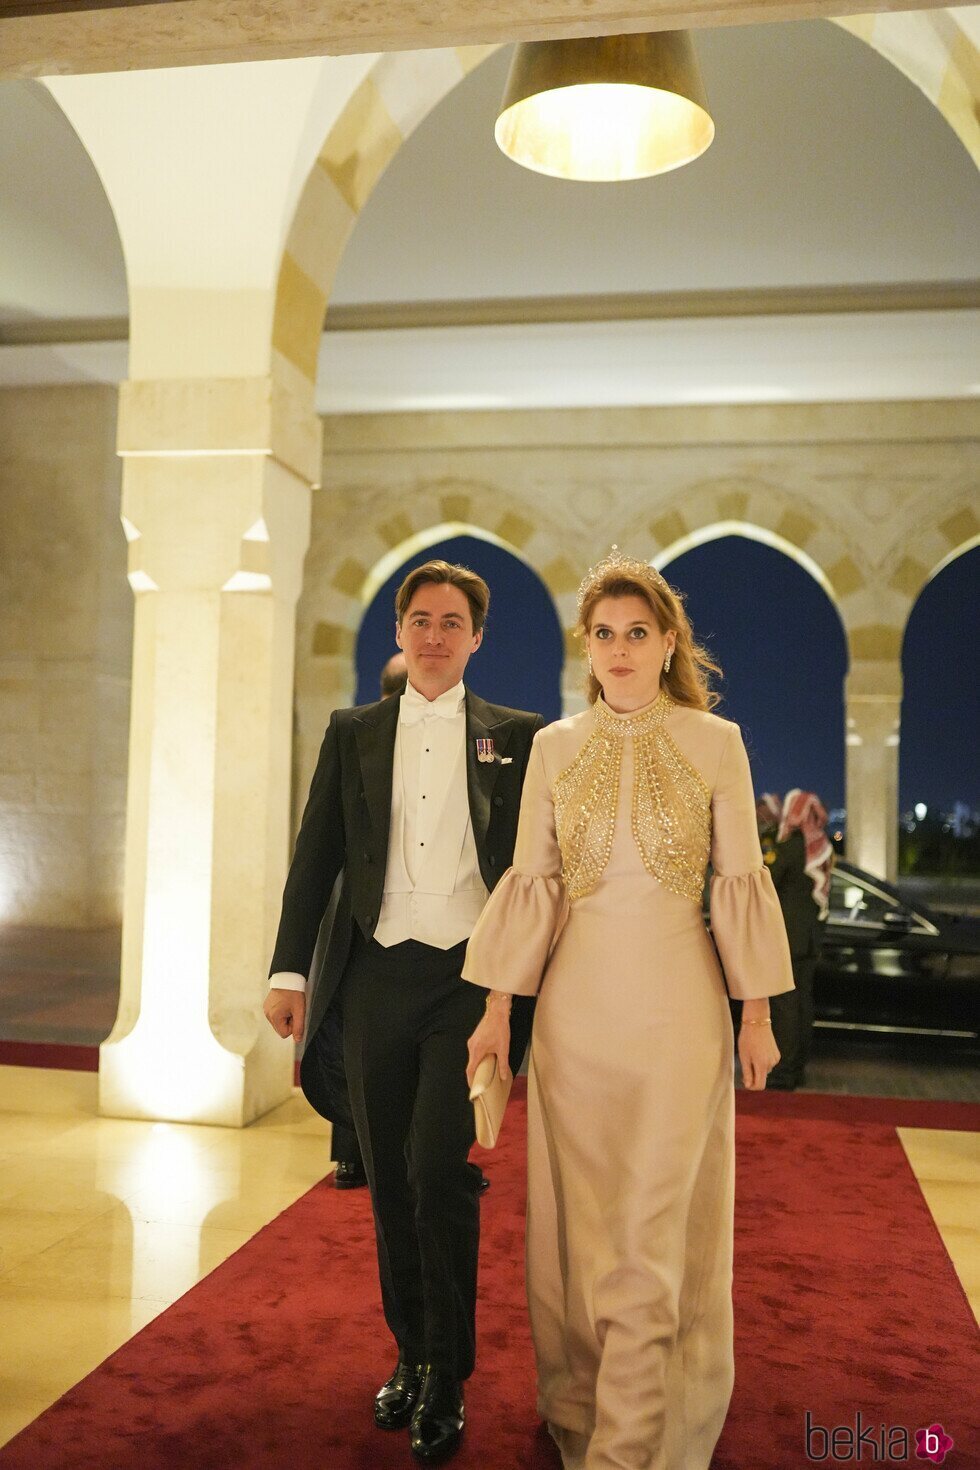 Edoardo Mapelli Mozzi y Beatriz de York con la tiara York en la recepción por la boda de Hussein y Rajwa de Jordania